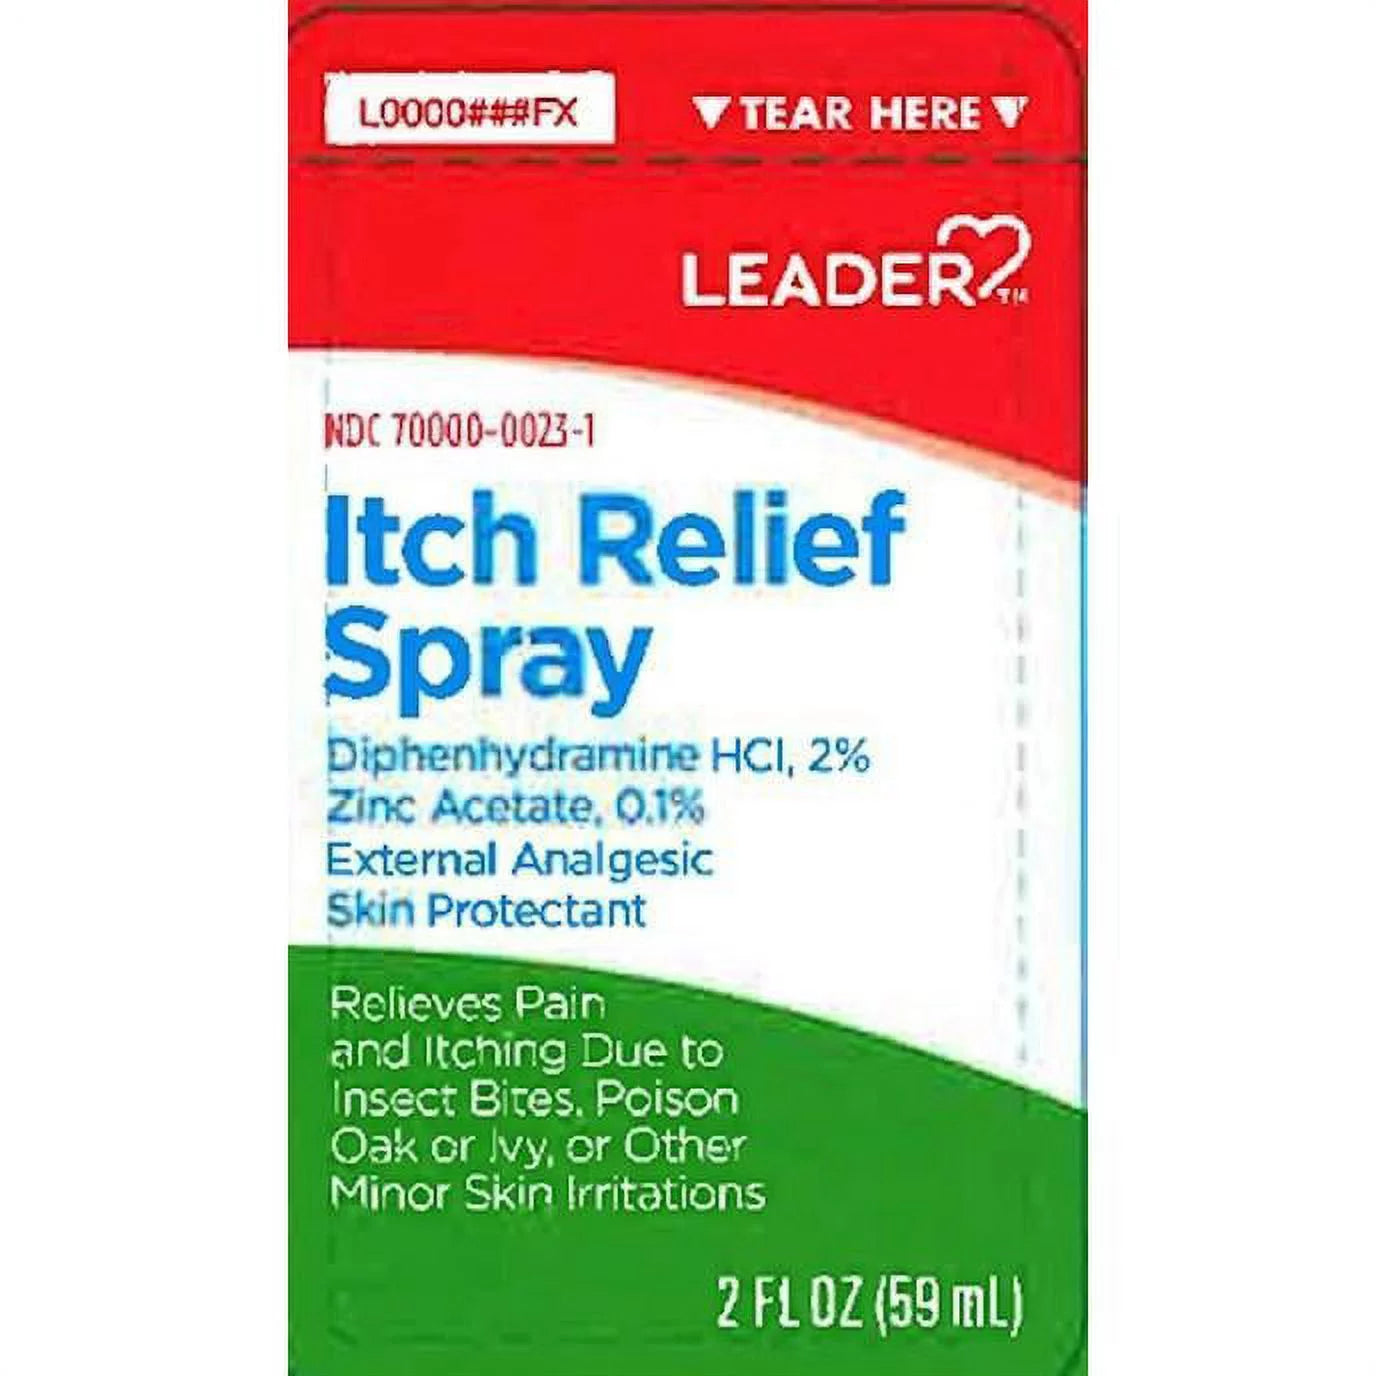 Leader (TM) Itch Relief Spray 2 Oz (Compare to Benadryl), Spray Non-Medical